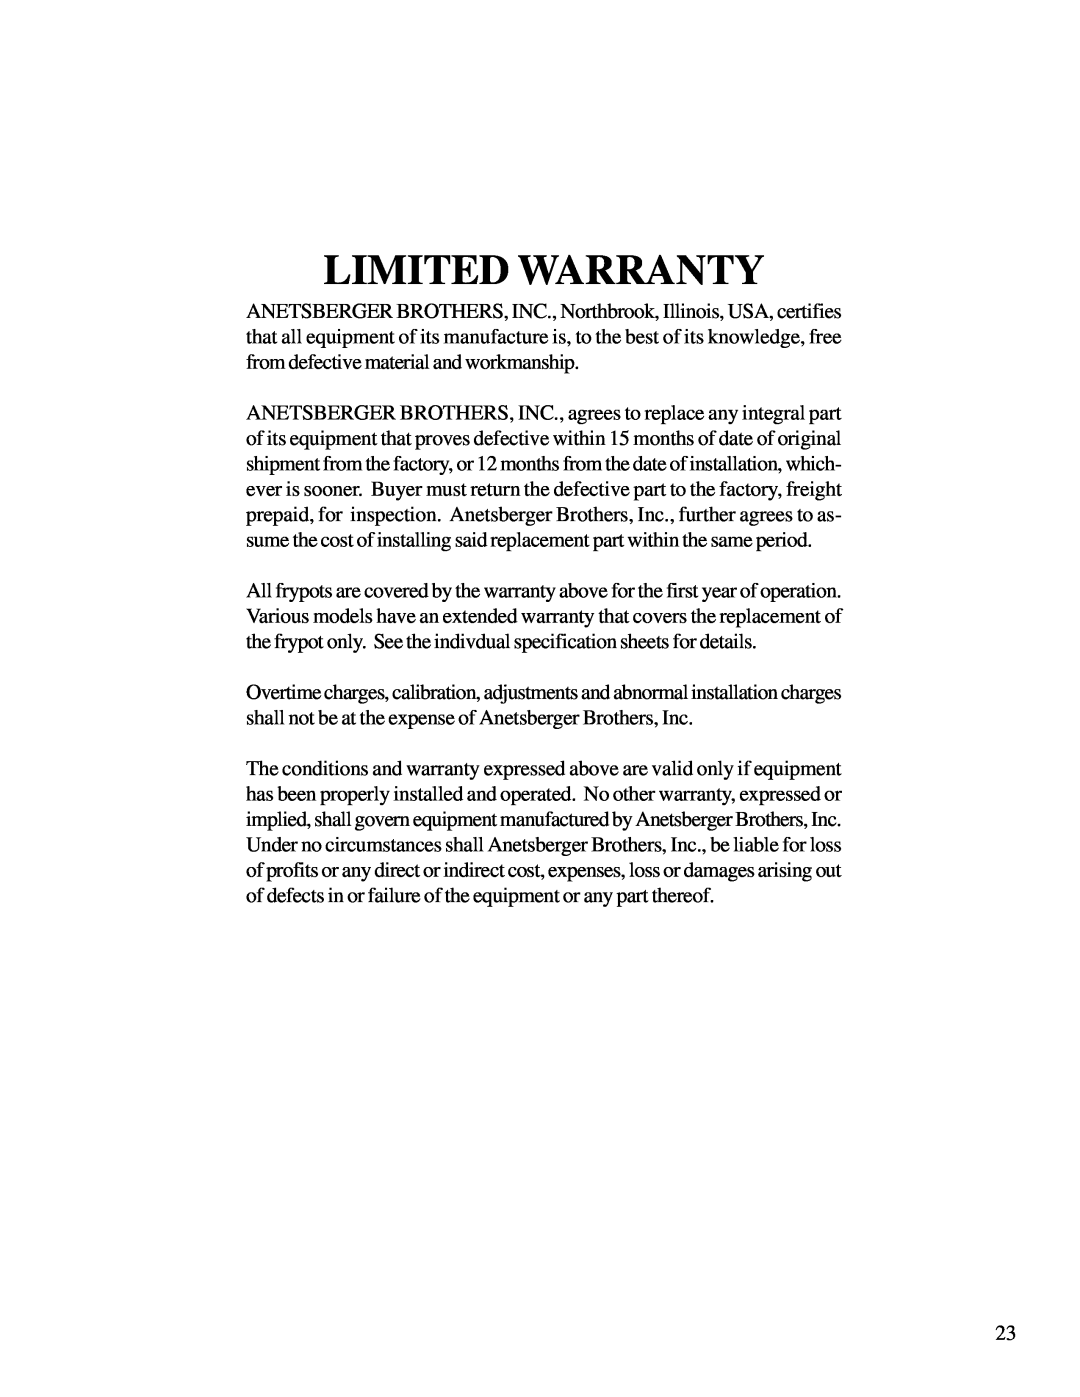 Anetsberger Brothers 14GS 14GU warranty Limited Warranty 